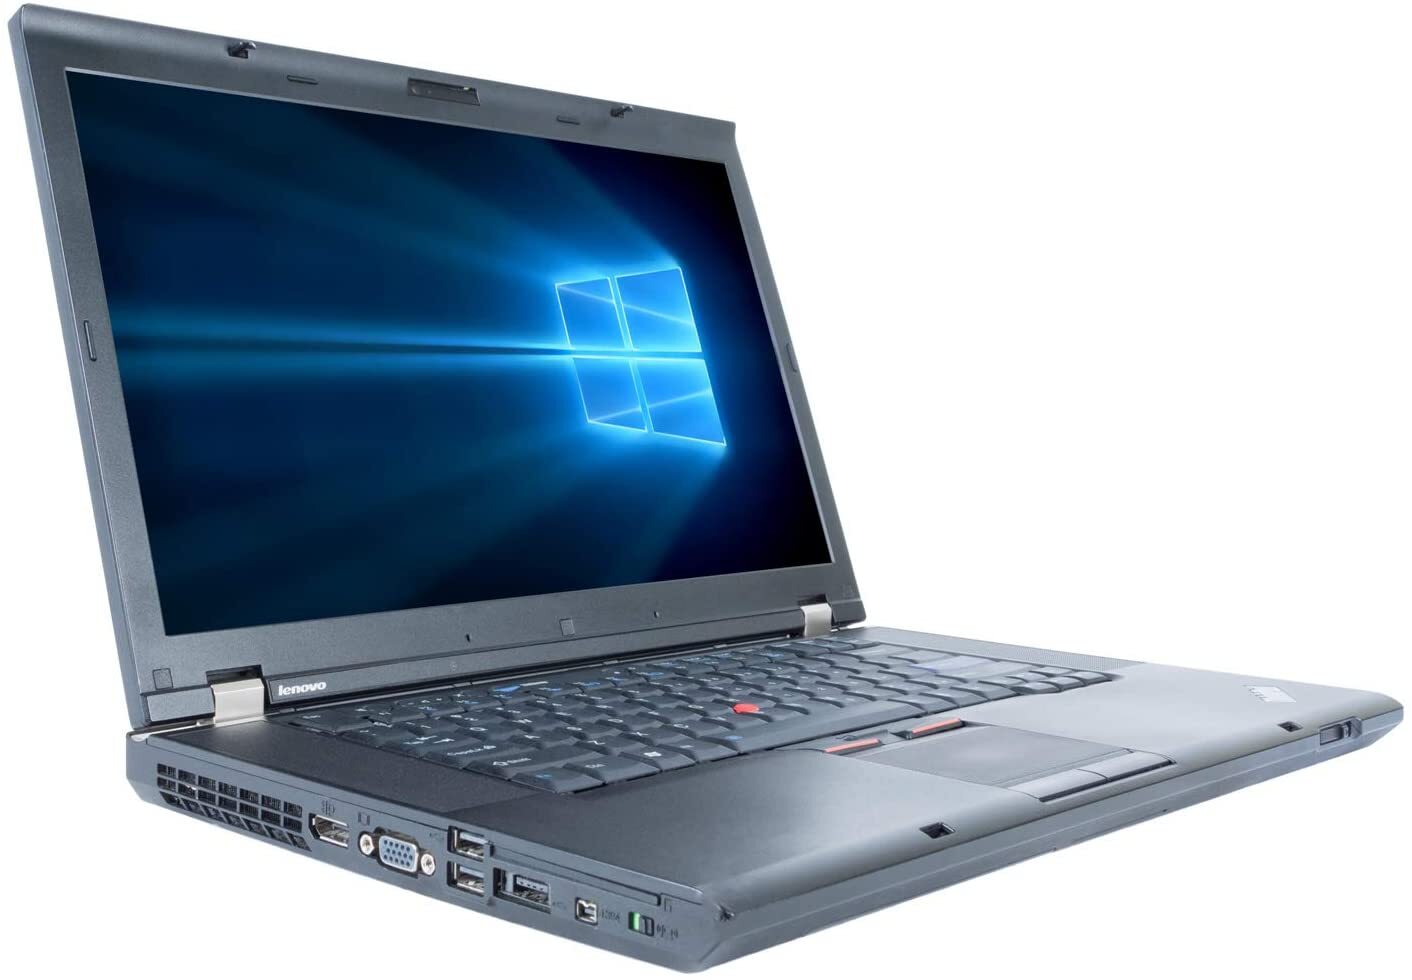 Lenovo ThinkPad T530 Intel i5 3320m 2.60Ghz 8GB RAM 320GB HDD 15.6" NO OS Pro Image 1